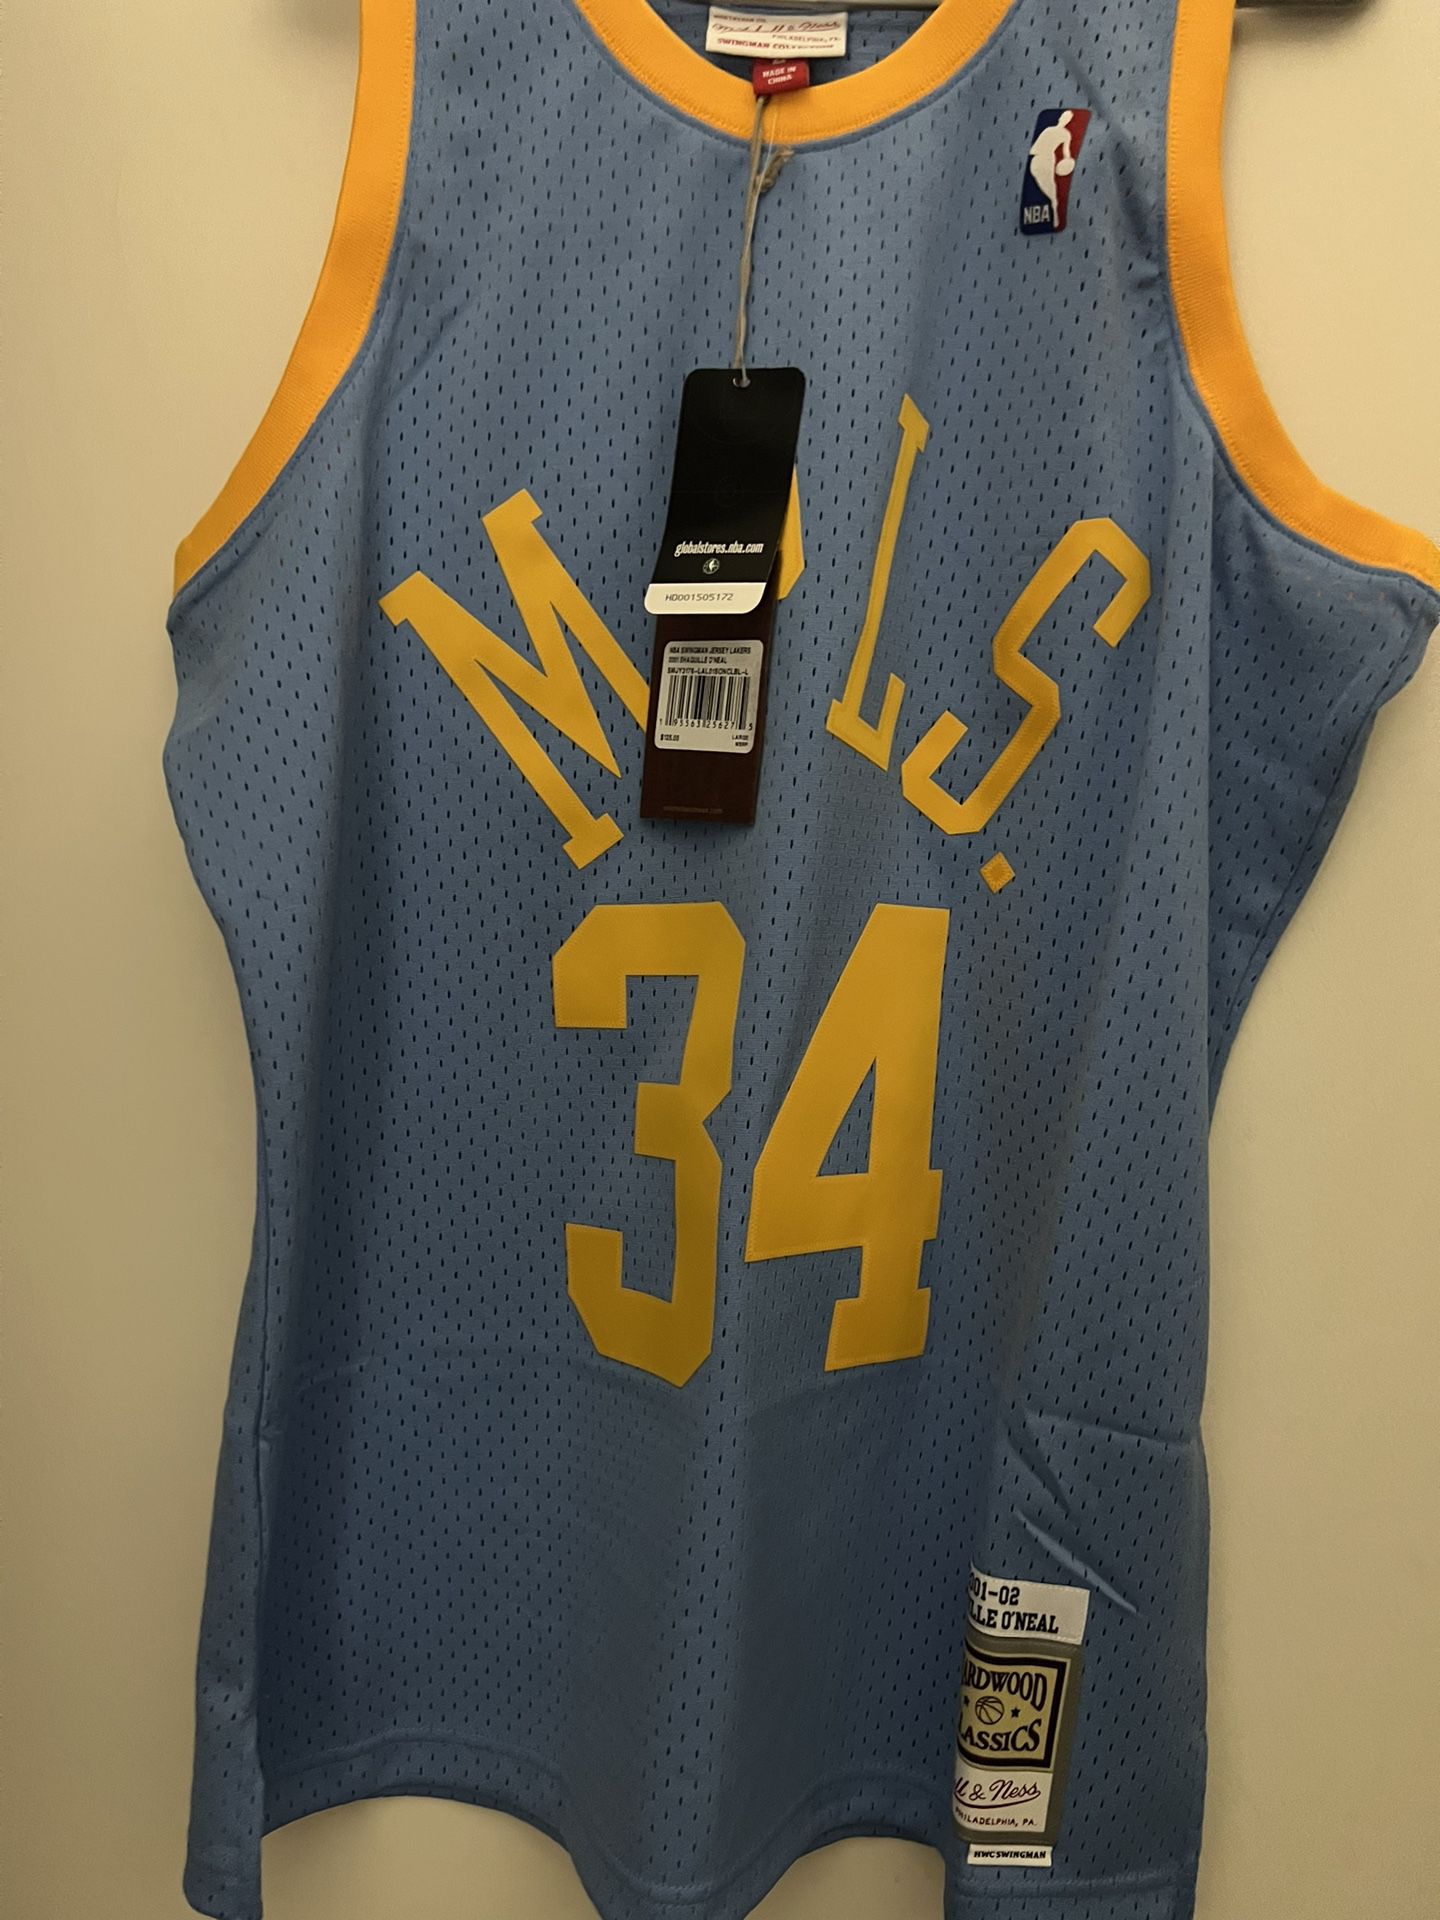 New JerseyMitchell & Ness NBA Lakers Jersey Swingman Shaquille O'Neal MPLS  2001-02 - Size XL